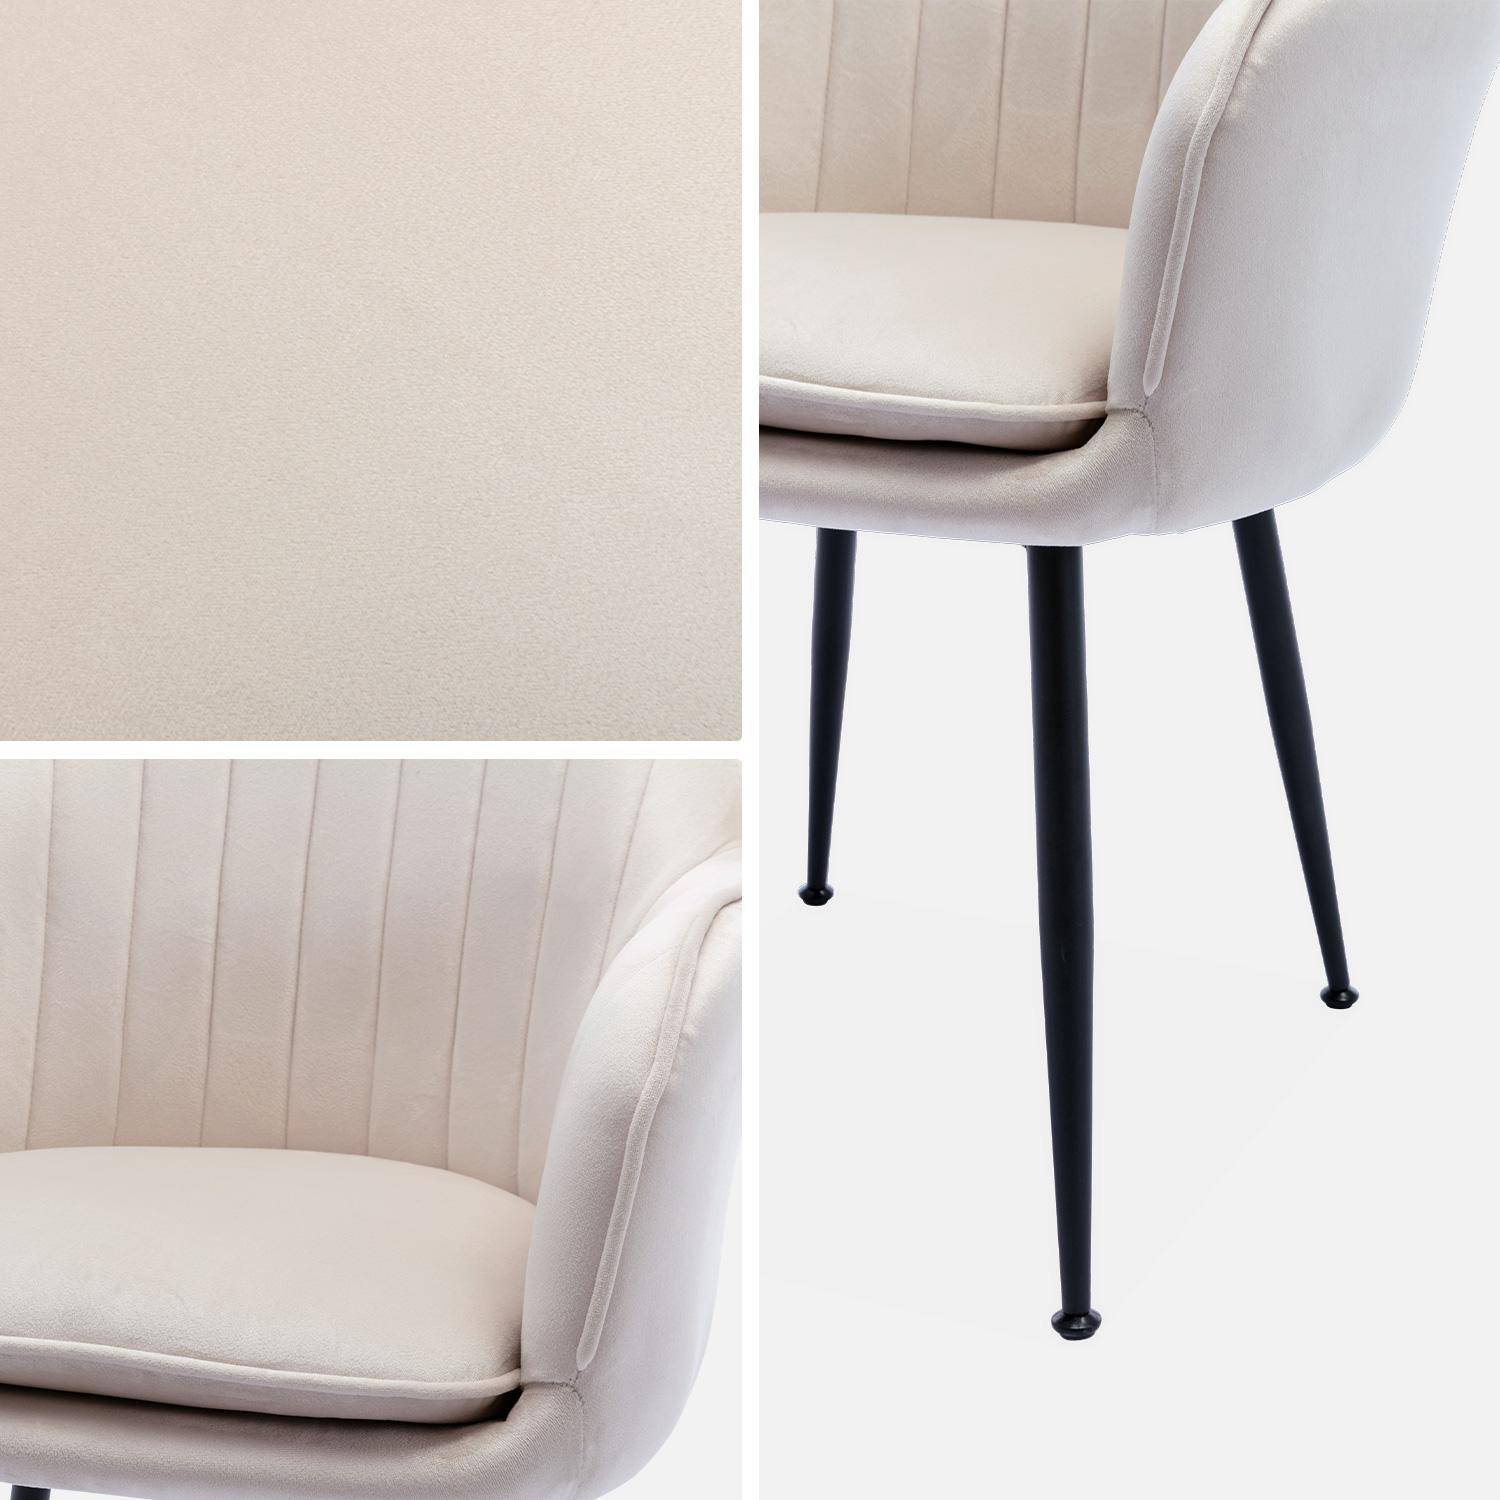 Velvet armchair with metal legs, 58x58x85cm - Shella - White,sweeek,Photo6